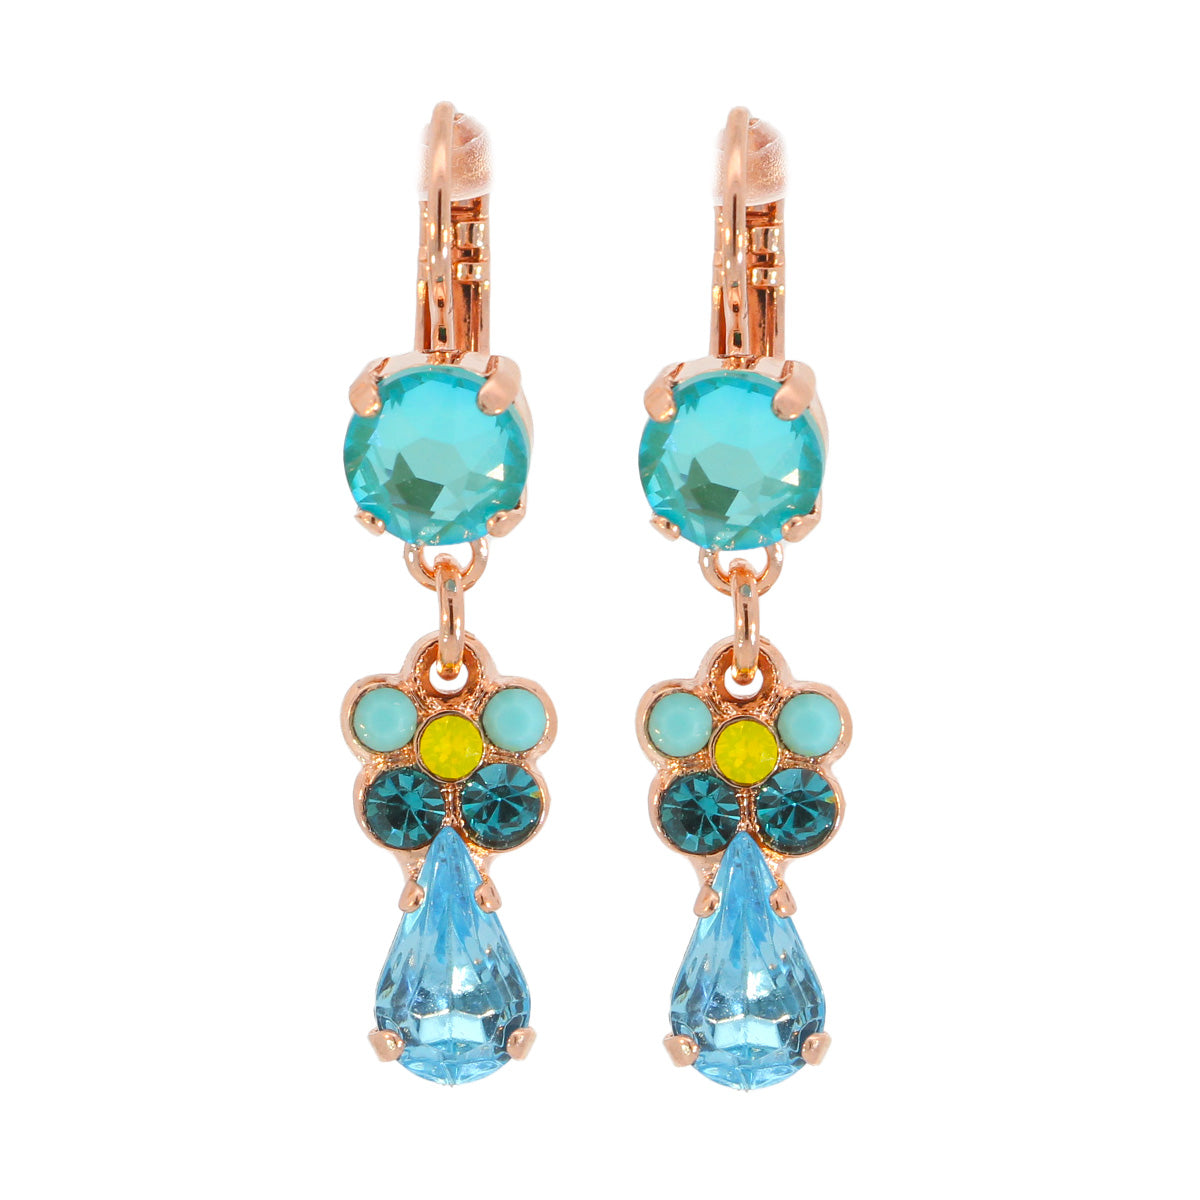 Mariana Positano Treasures Earrings E-1414 4002